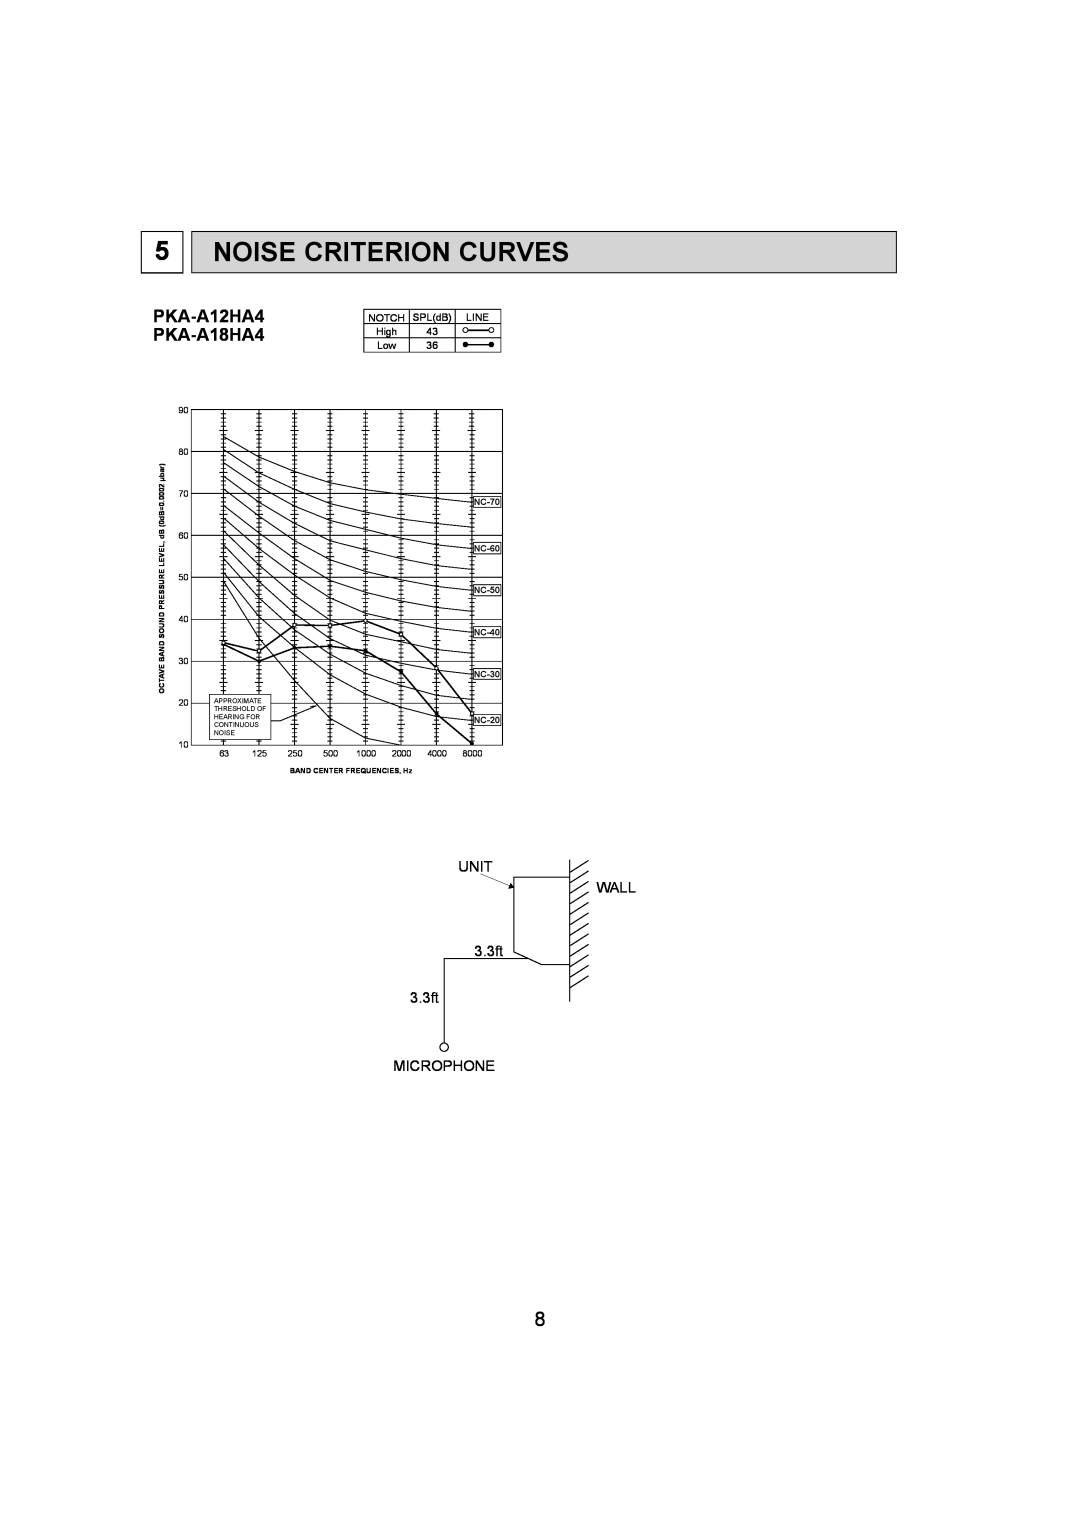 Mitsumi electronic Noise Criterion Curves, PKA-A12HA4 PKA-A18HA4, NC-70, NC-60, NC-50, NC-40, NC-30, NC-20 